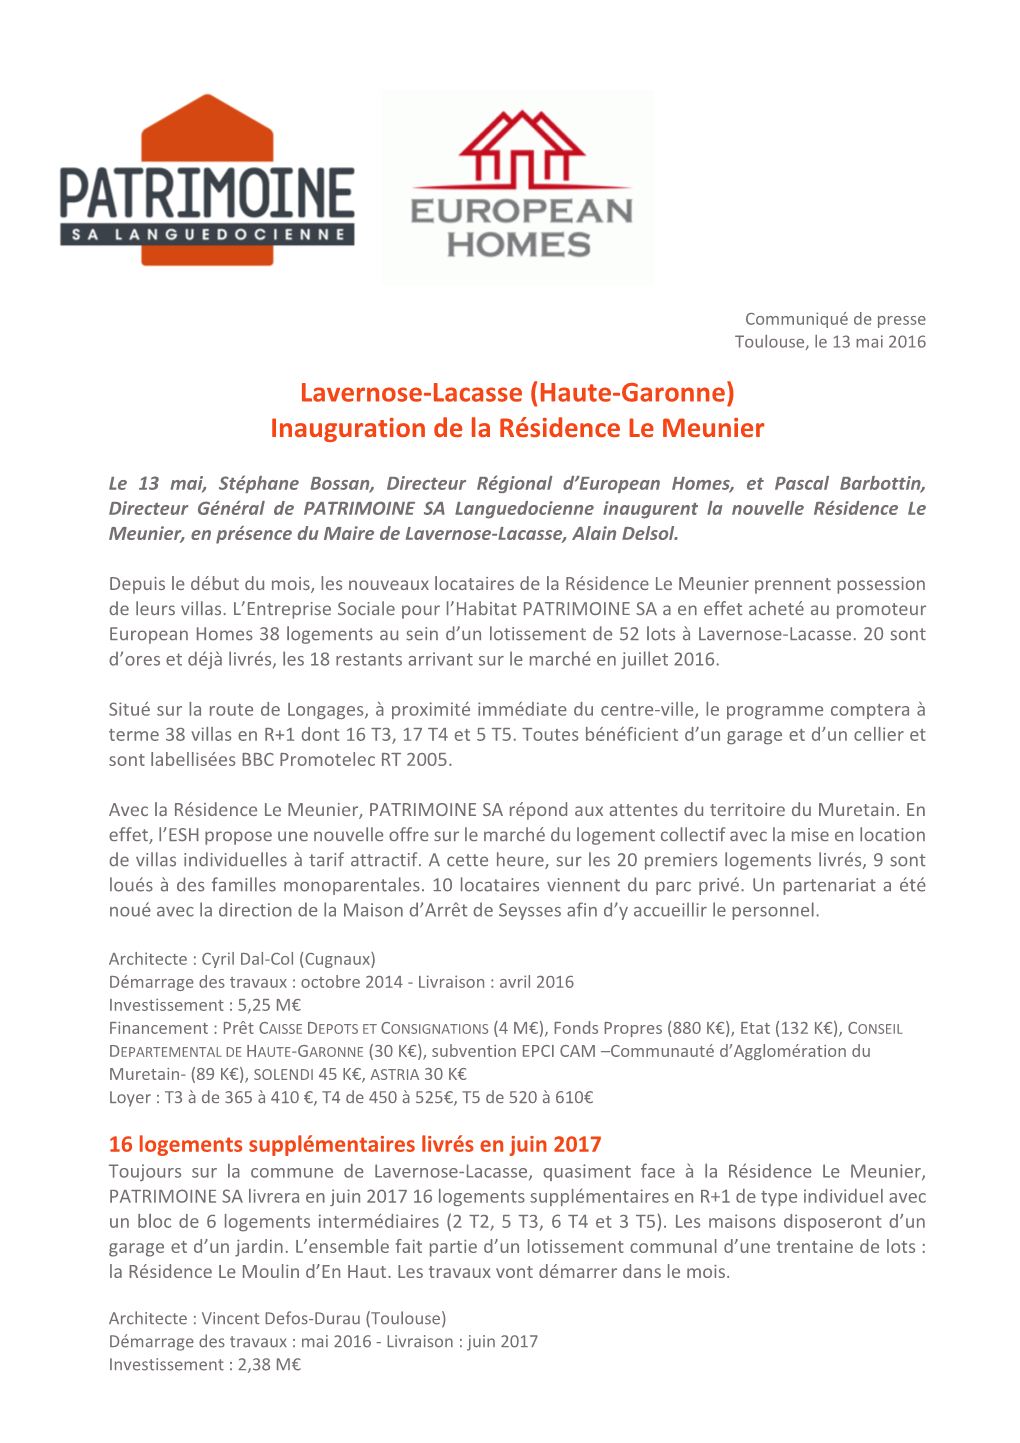 Lavernose-Lacasse (Haute-Garonne) Inauguration De La Résidence Le Meunier